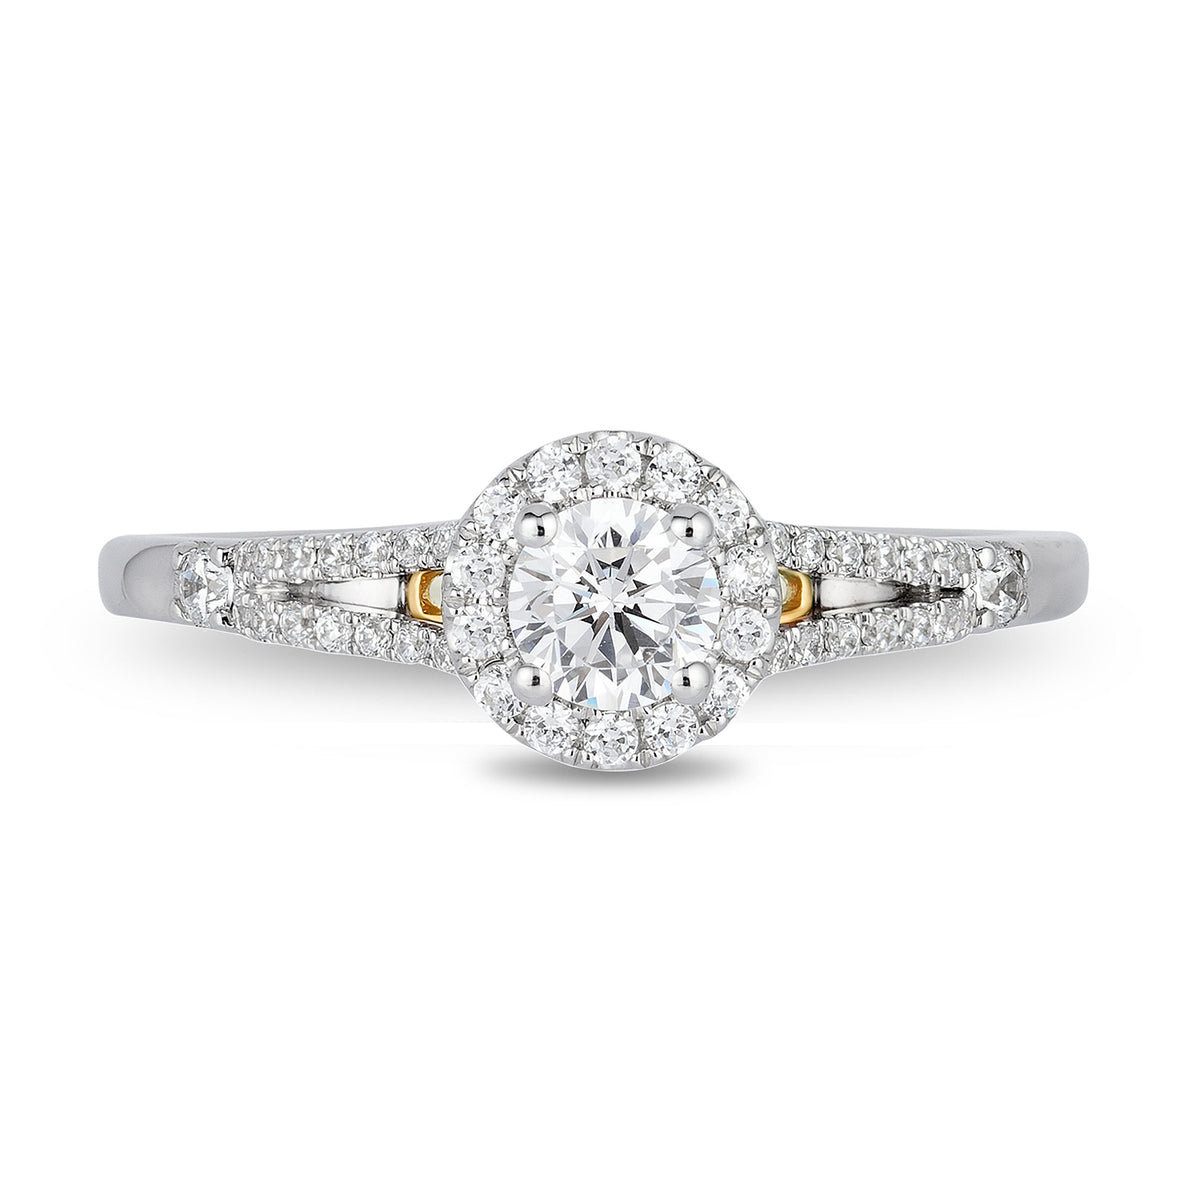 Disney Cinderella Inspired Diamond Engagement Ring 14K Yellow Gold 1/2 Cttw | Enchanted Disney Fine Jewelry 8